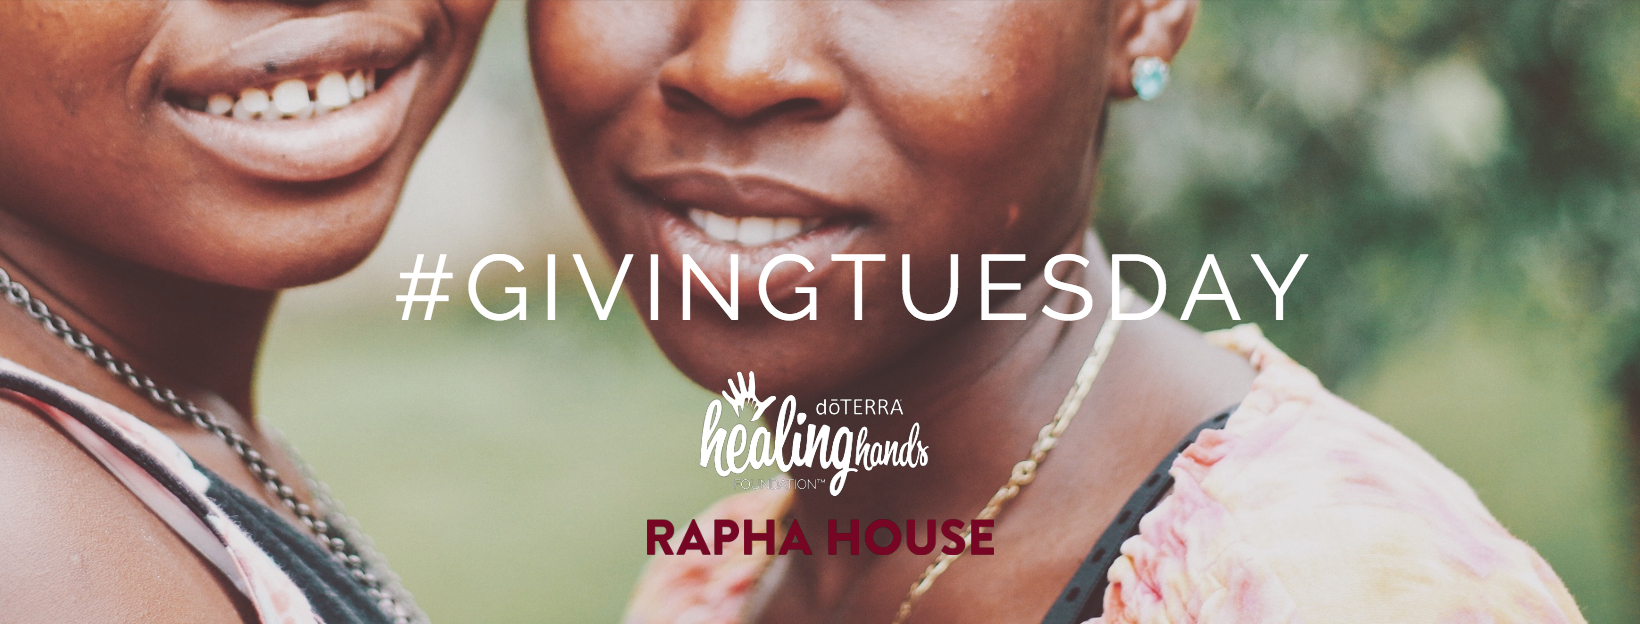 #GivingTuesday with Rapha House